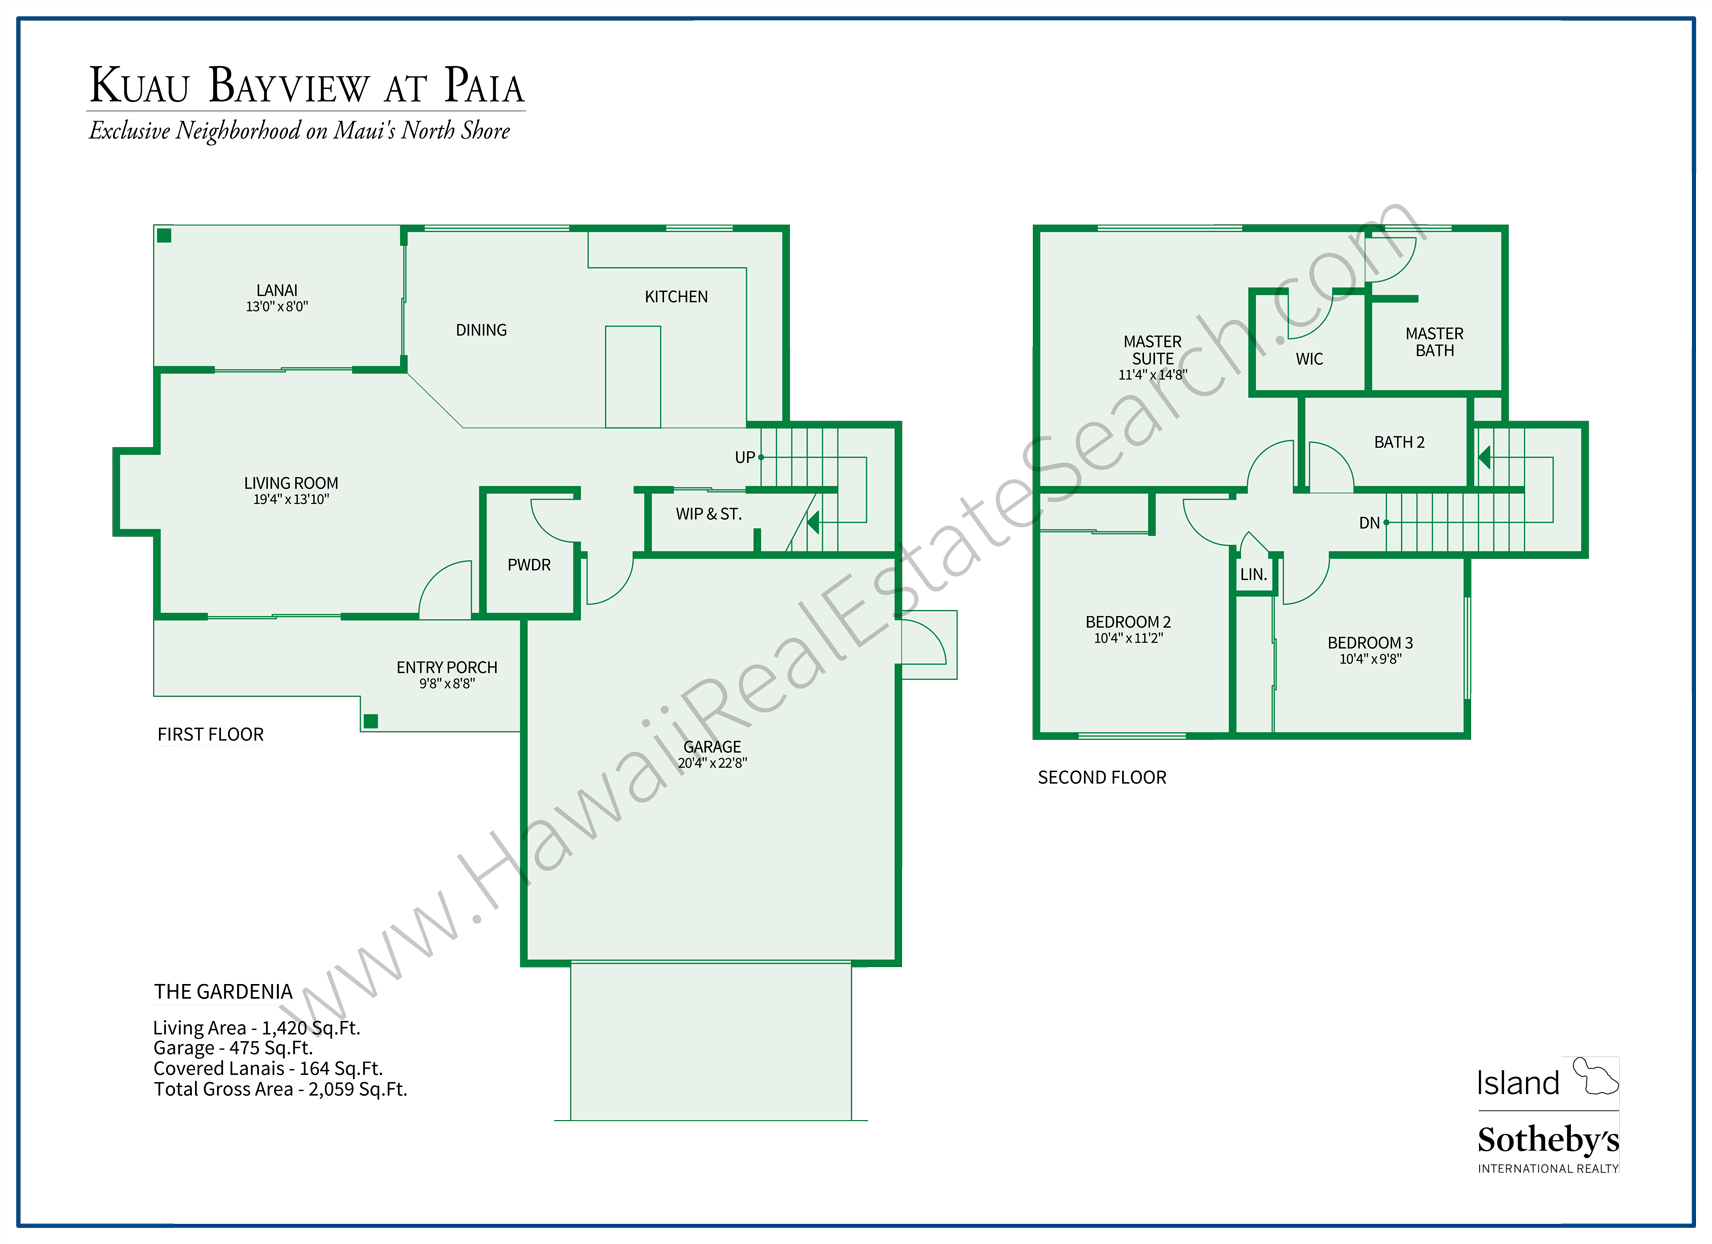 Kuau Bayview Gardenia Floor Plan